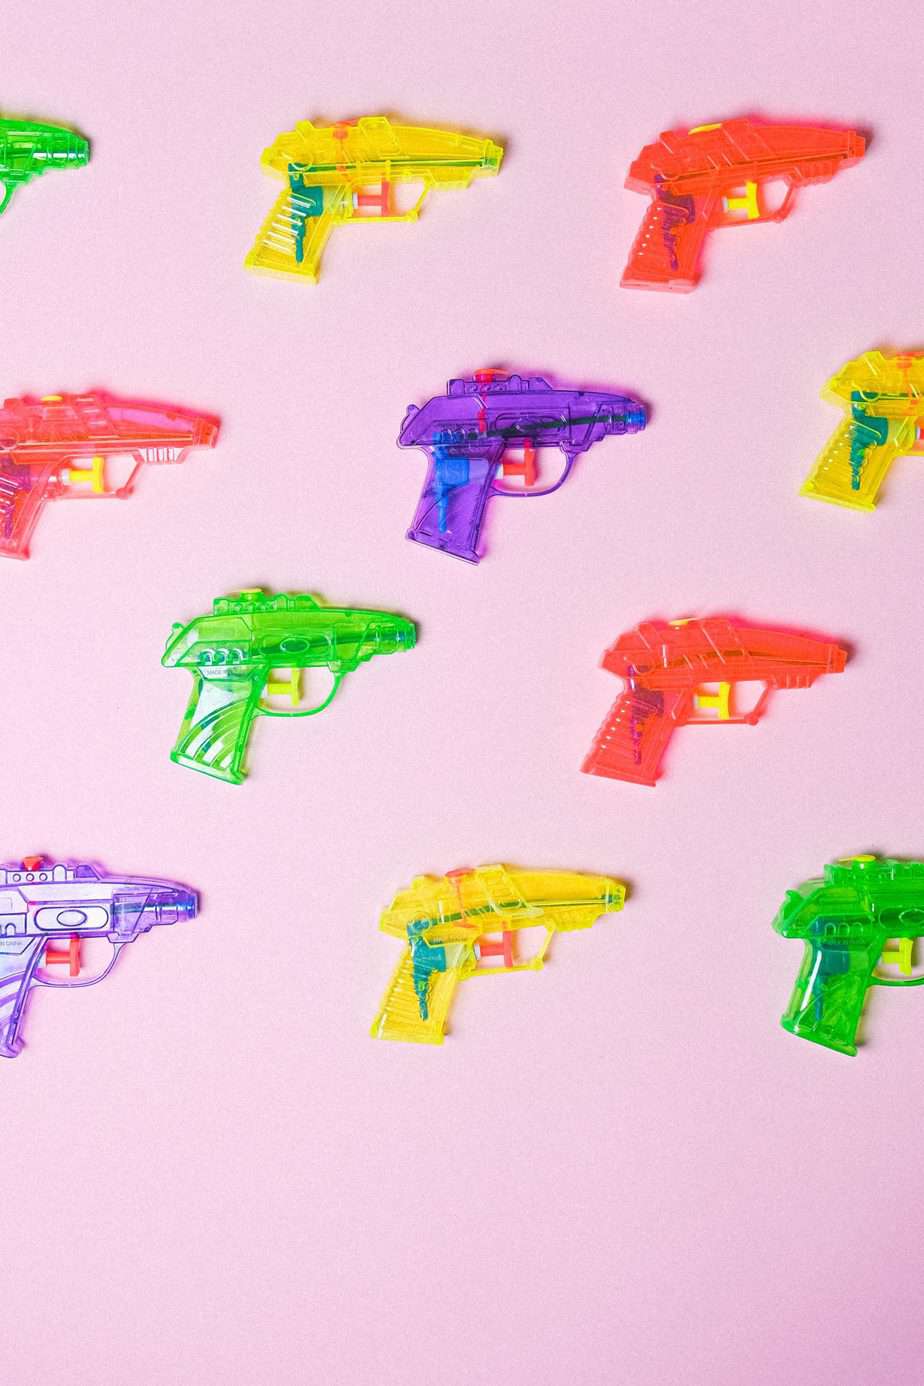 8 Nerf Gun Gift Ideas Your Kid Will Love!